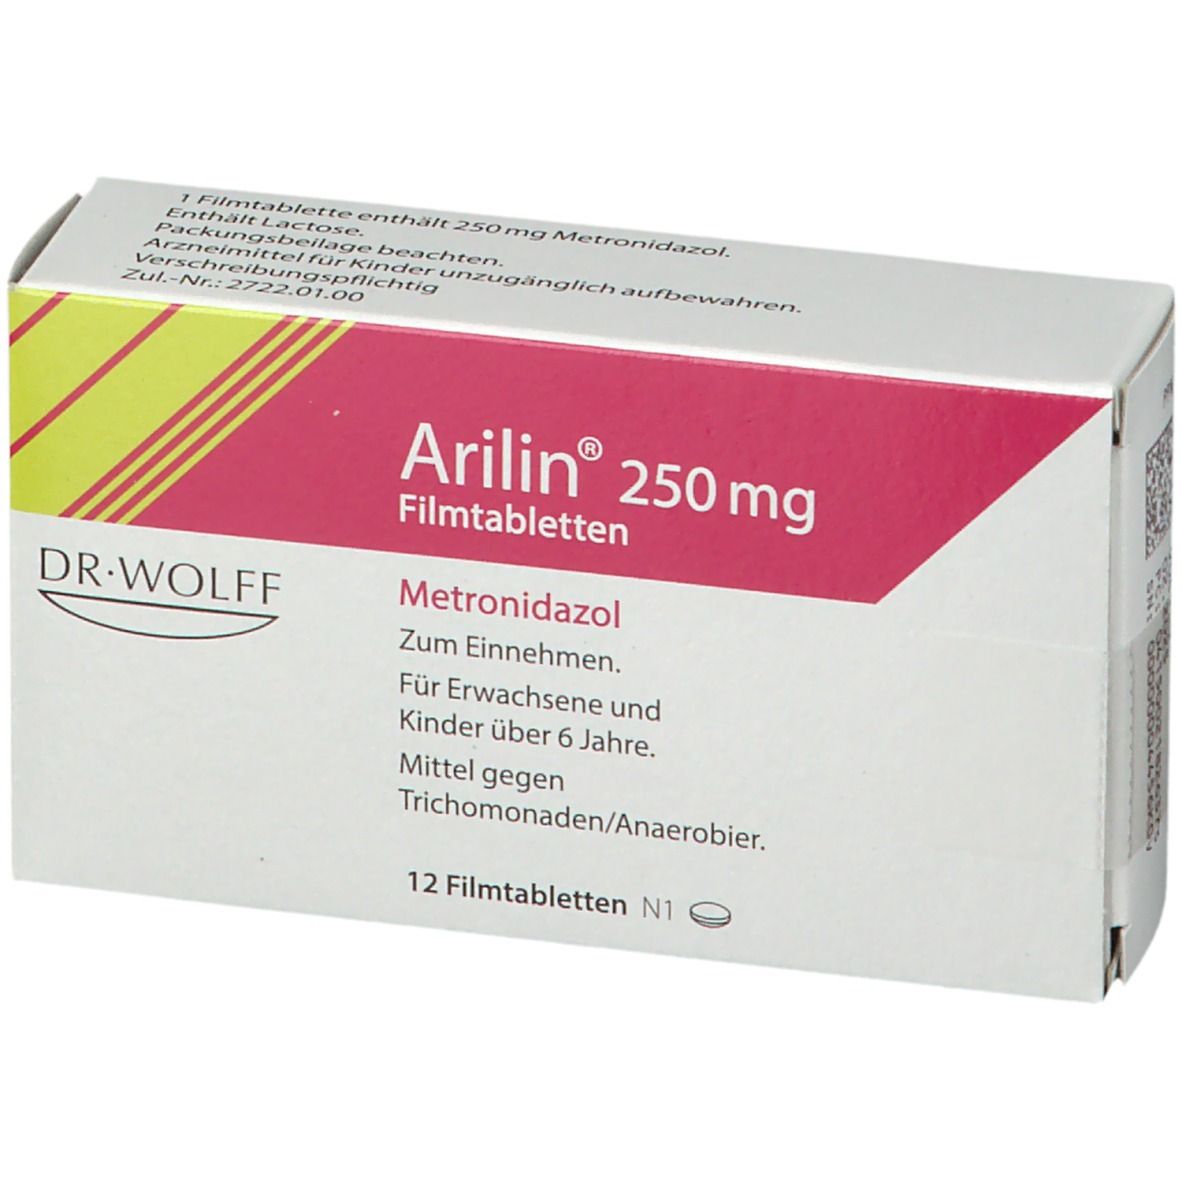 Arilin® 250 mg